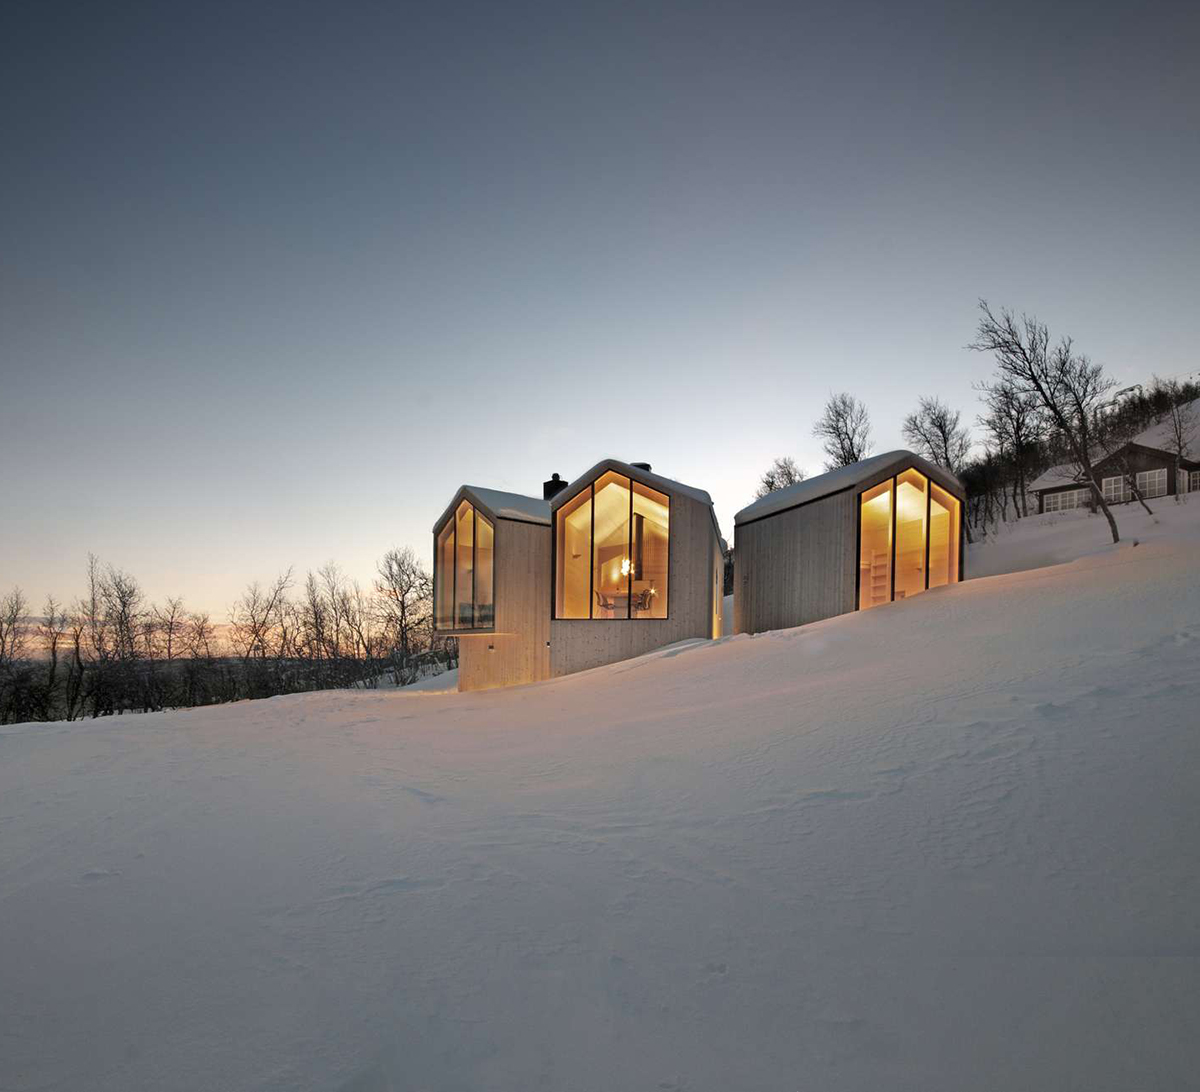  Split View Mountain Lodge Cabin Reiulf Ramstad Arkitekter 